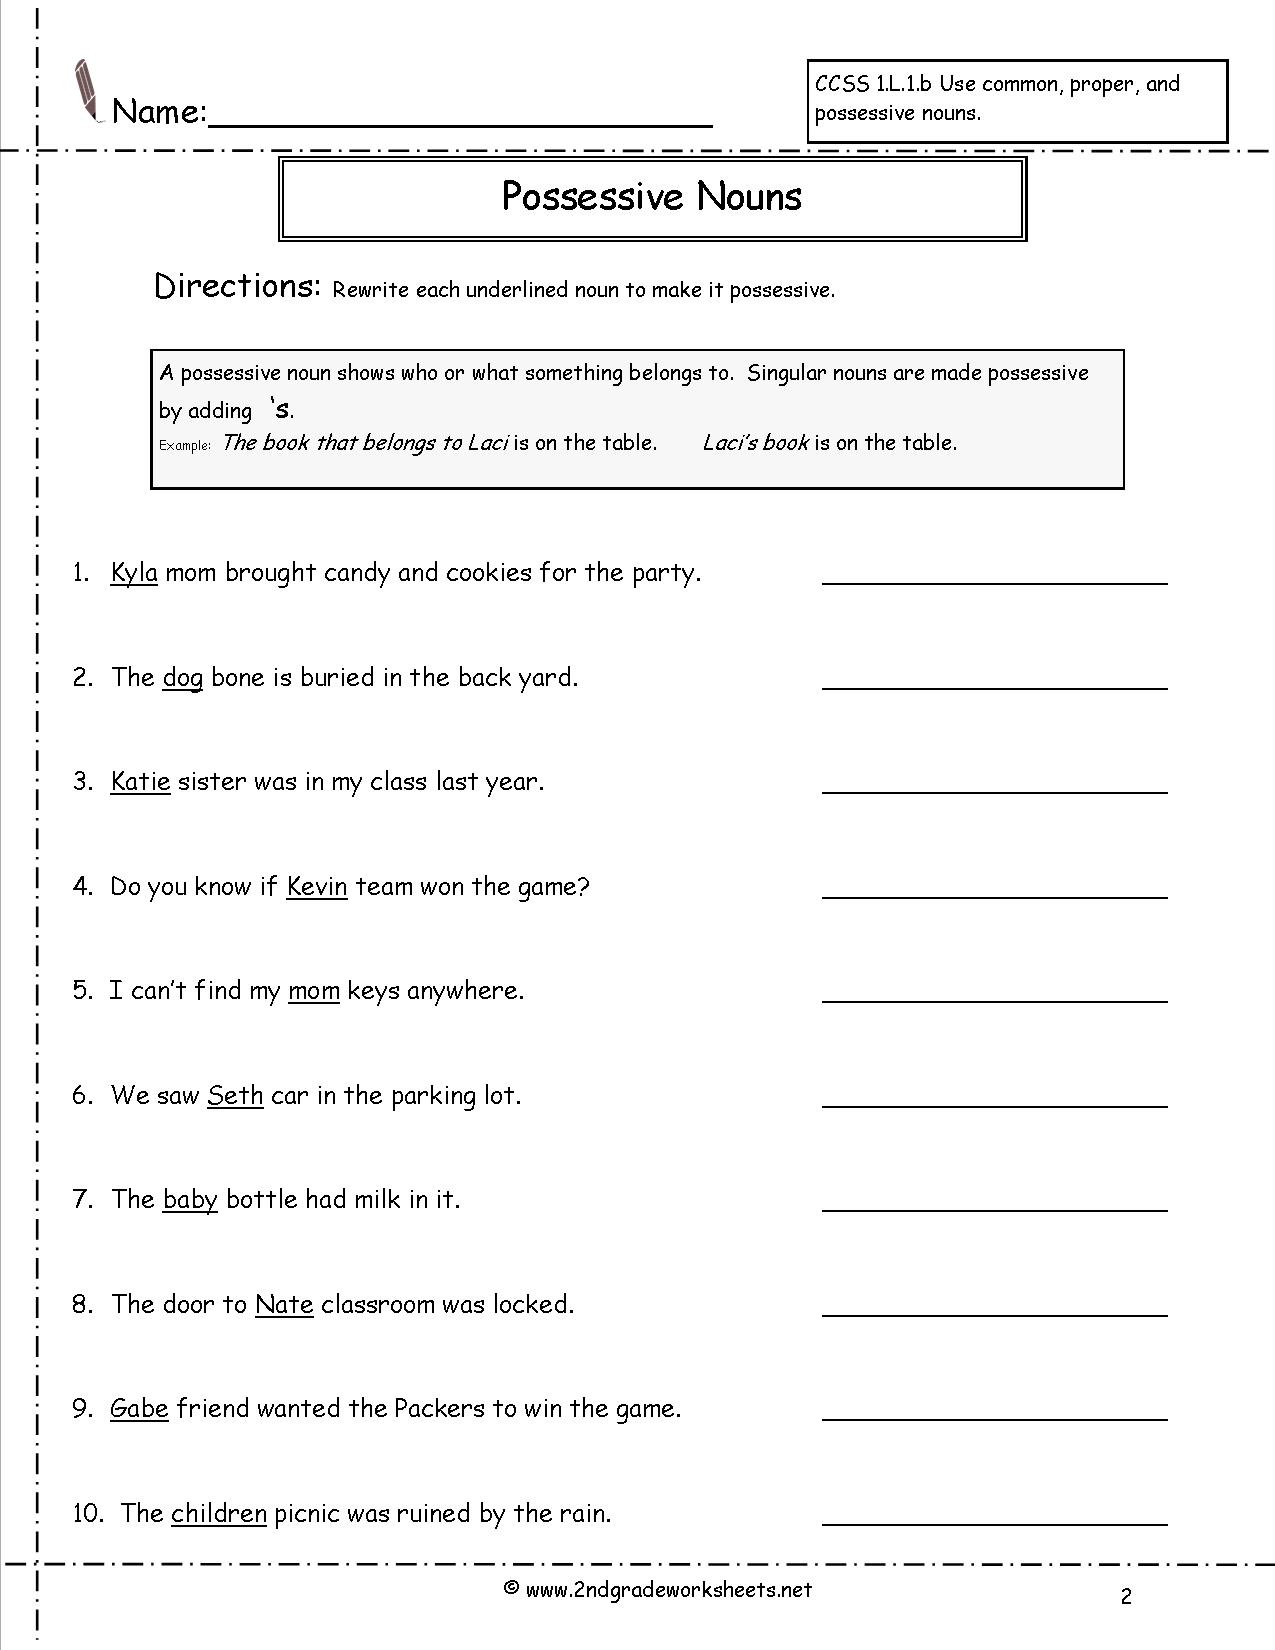 Possessive Nouns Printable Worksheets Printable Worksheets